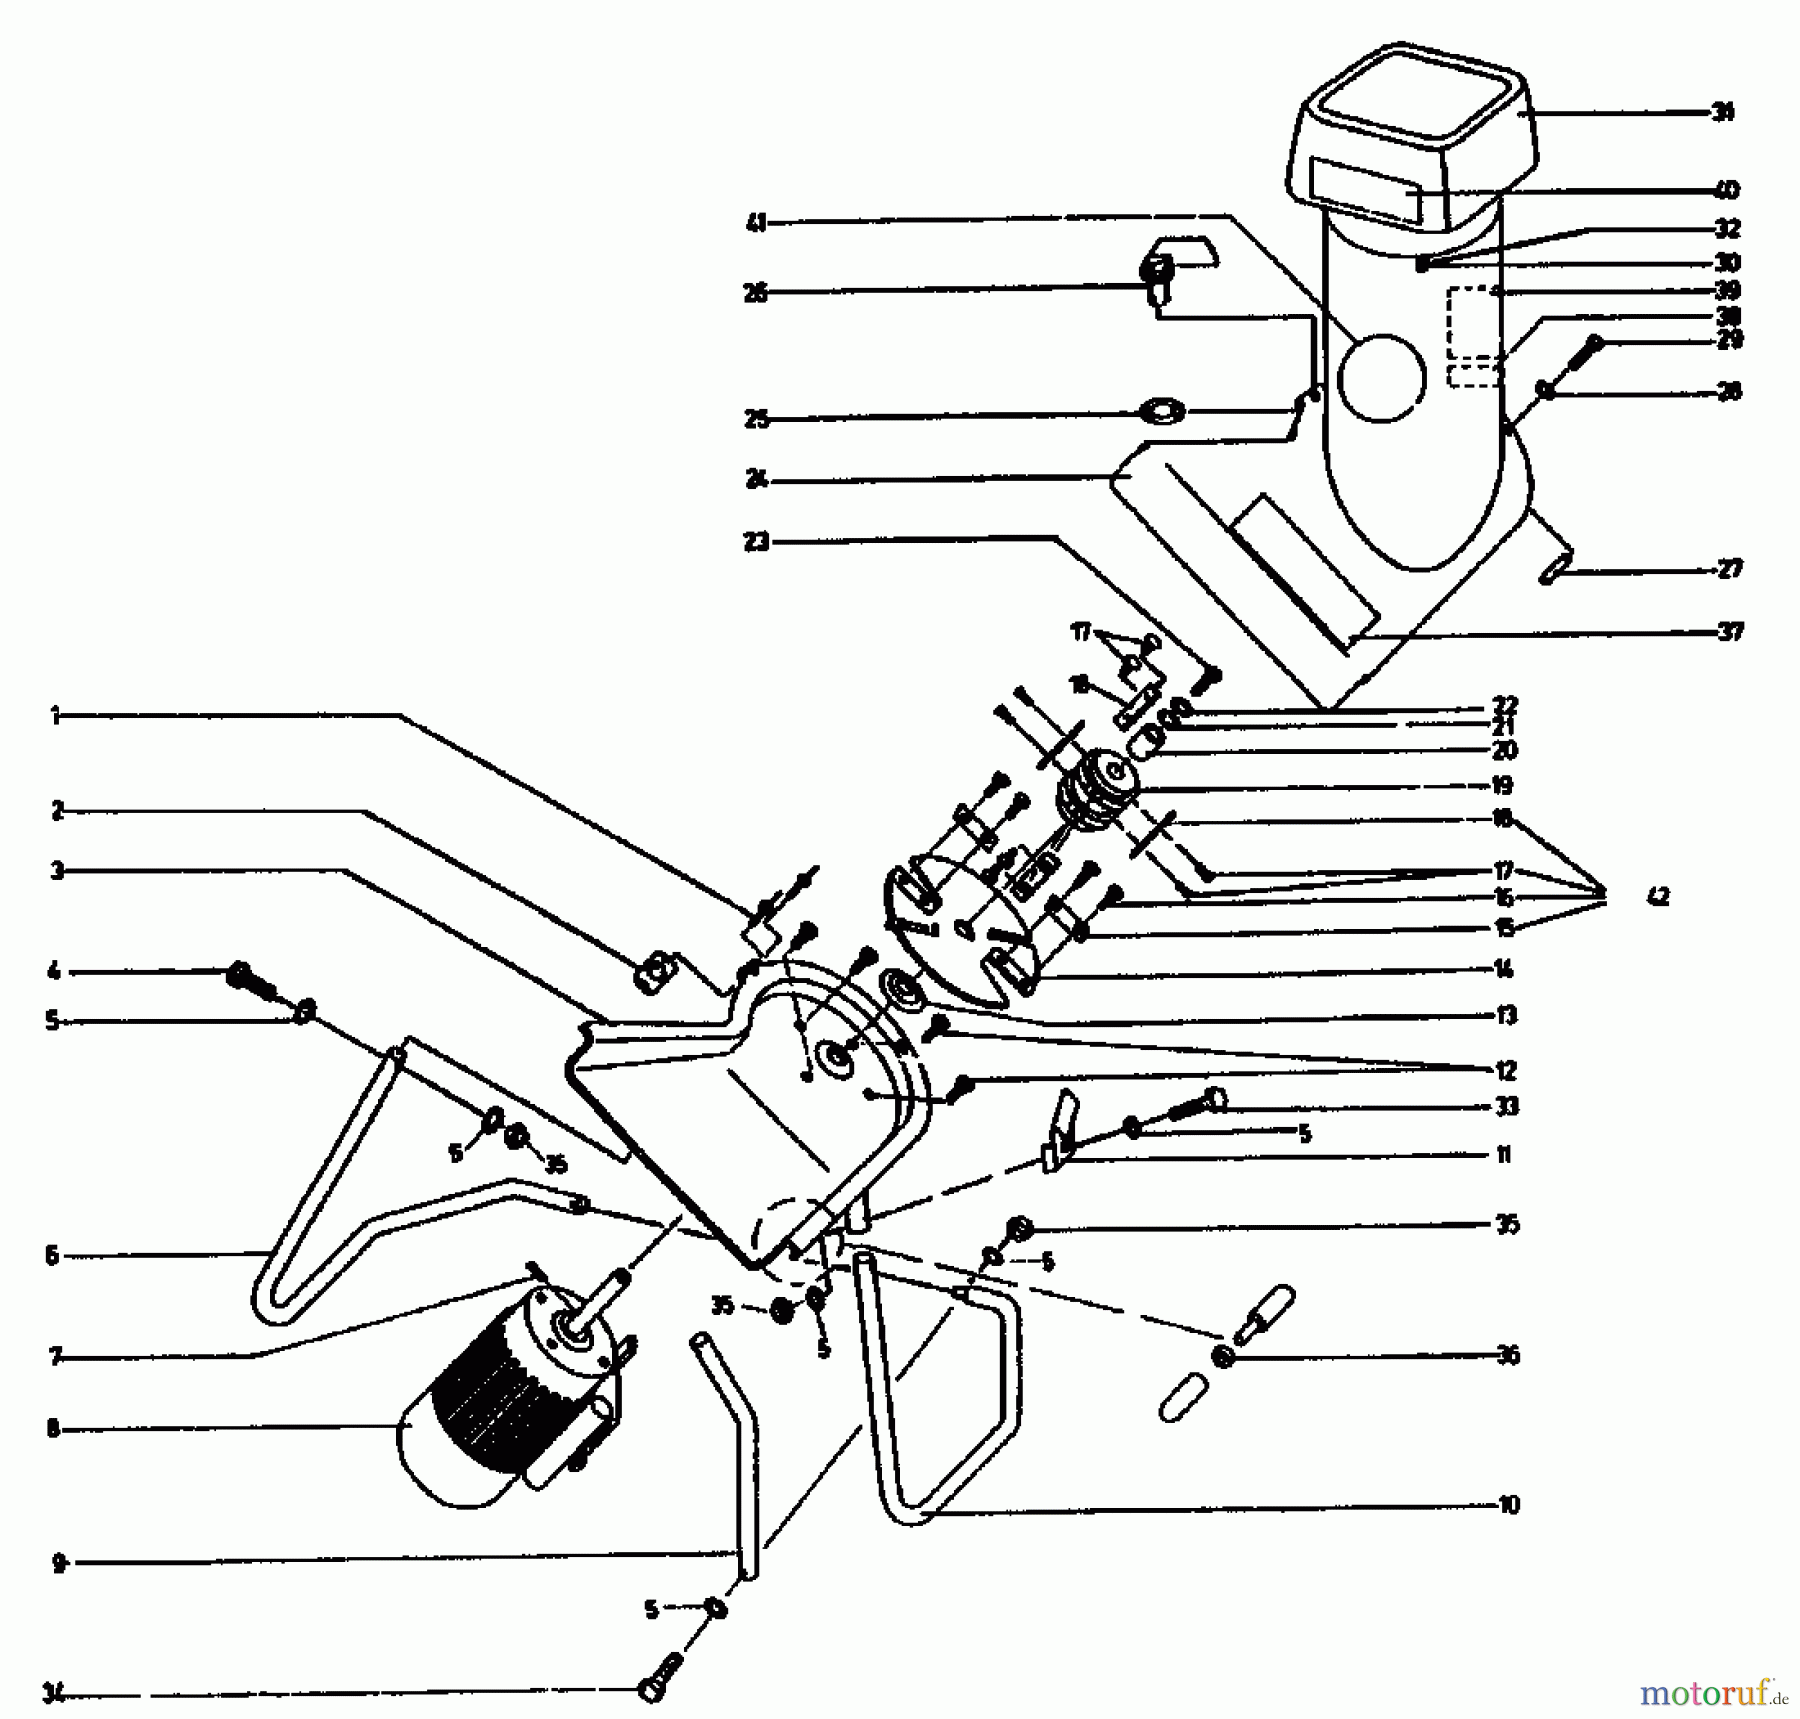  Gutbrod Chipper GAE 13 04002.03  (1992) Basic machine